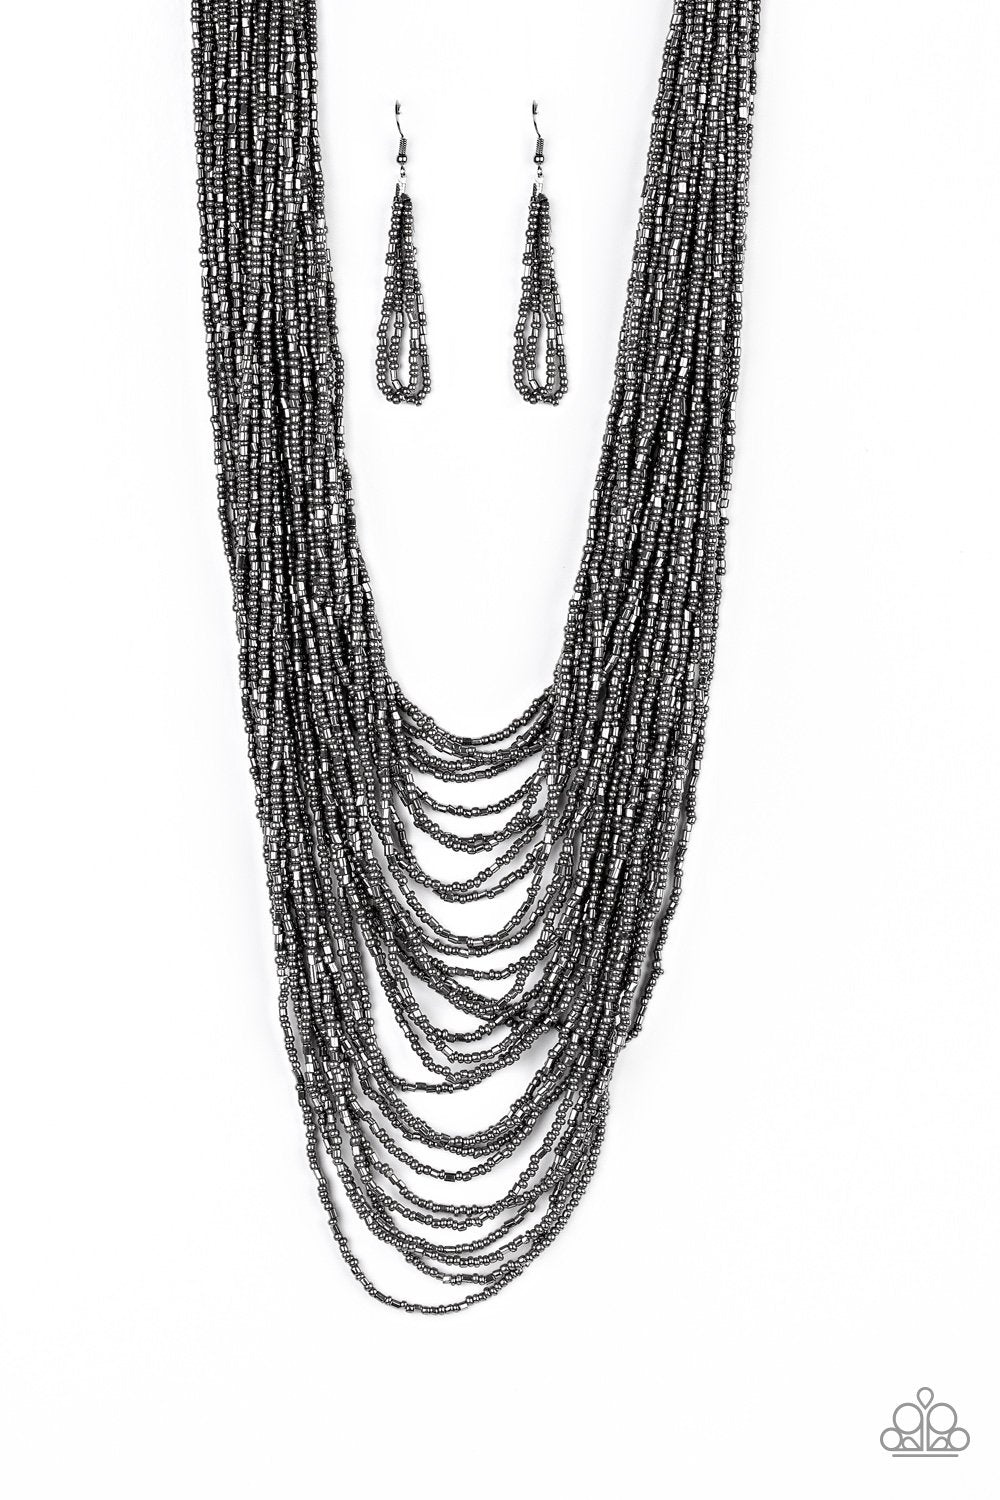 Dauntless Dazzle Gunmetal Black Seed Bead Necklace - Paparazzi Accessories-CarasShop.com - $5 Jewelry by Cara Jewels